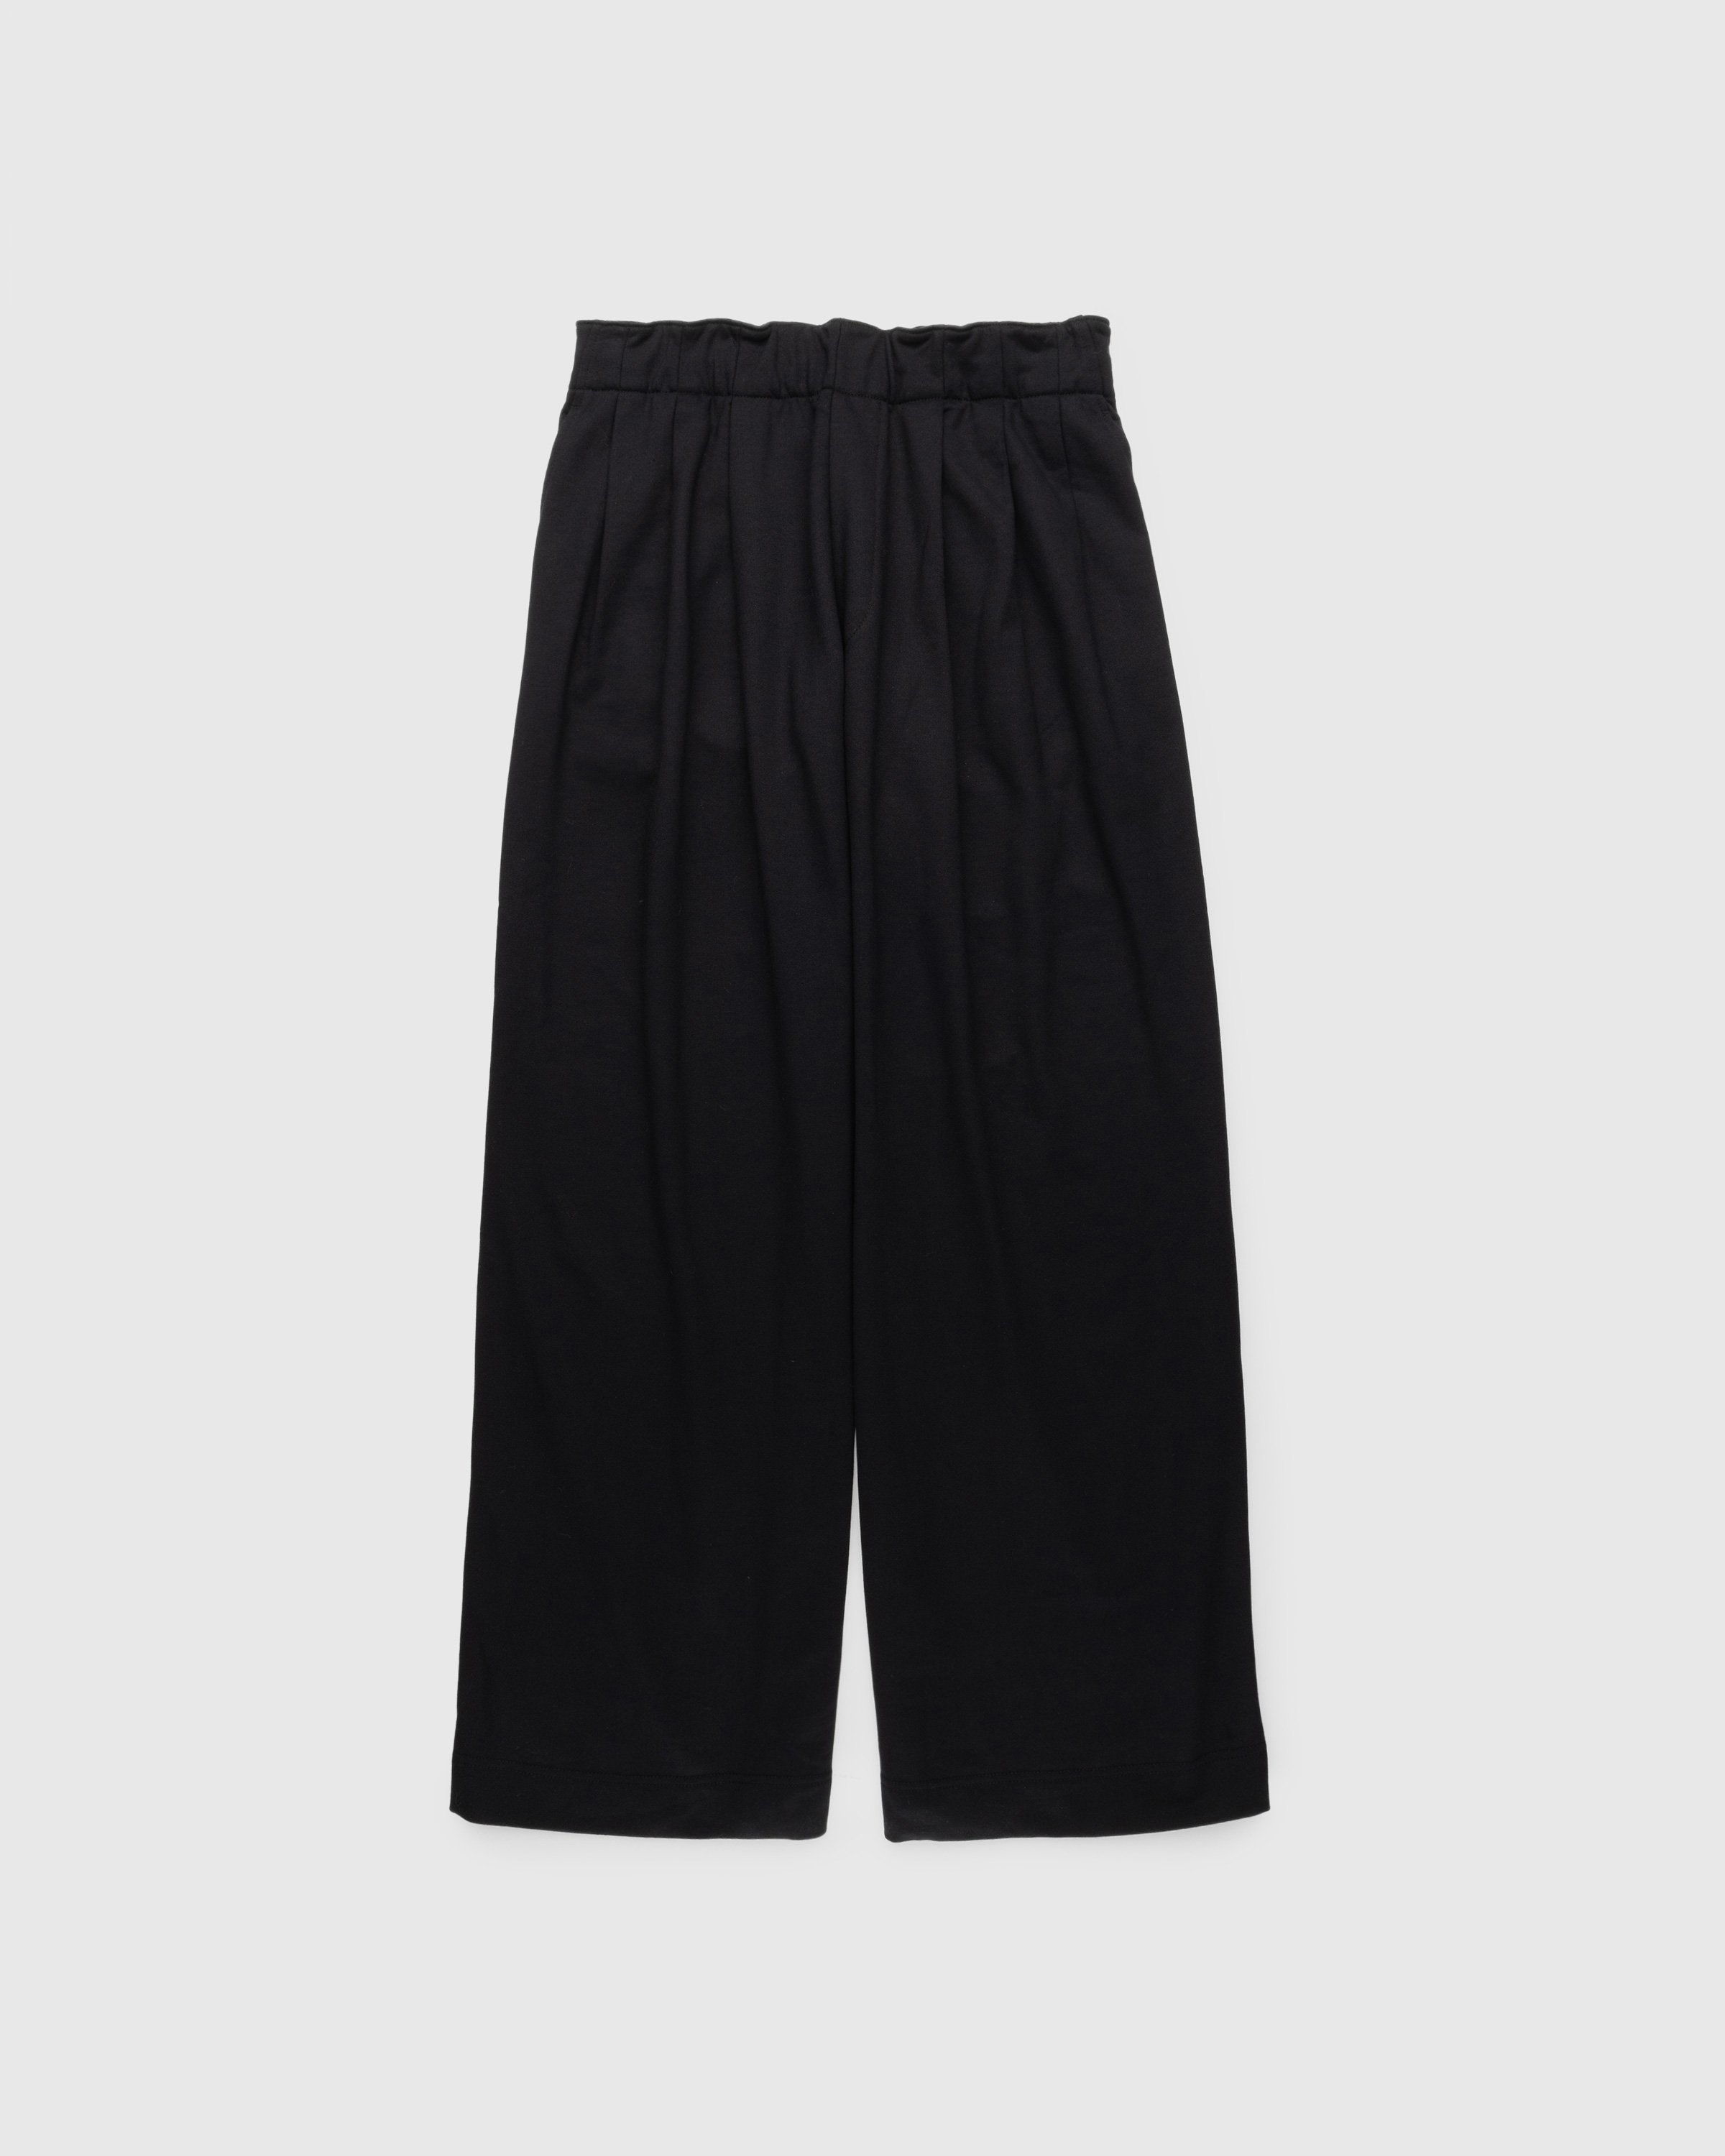 Dries van Noten - Hama Cotton Jersey Pants Black - Clothing - Black - Image 1